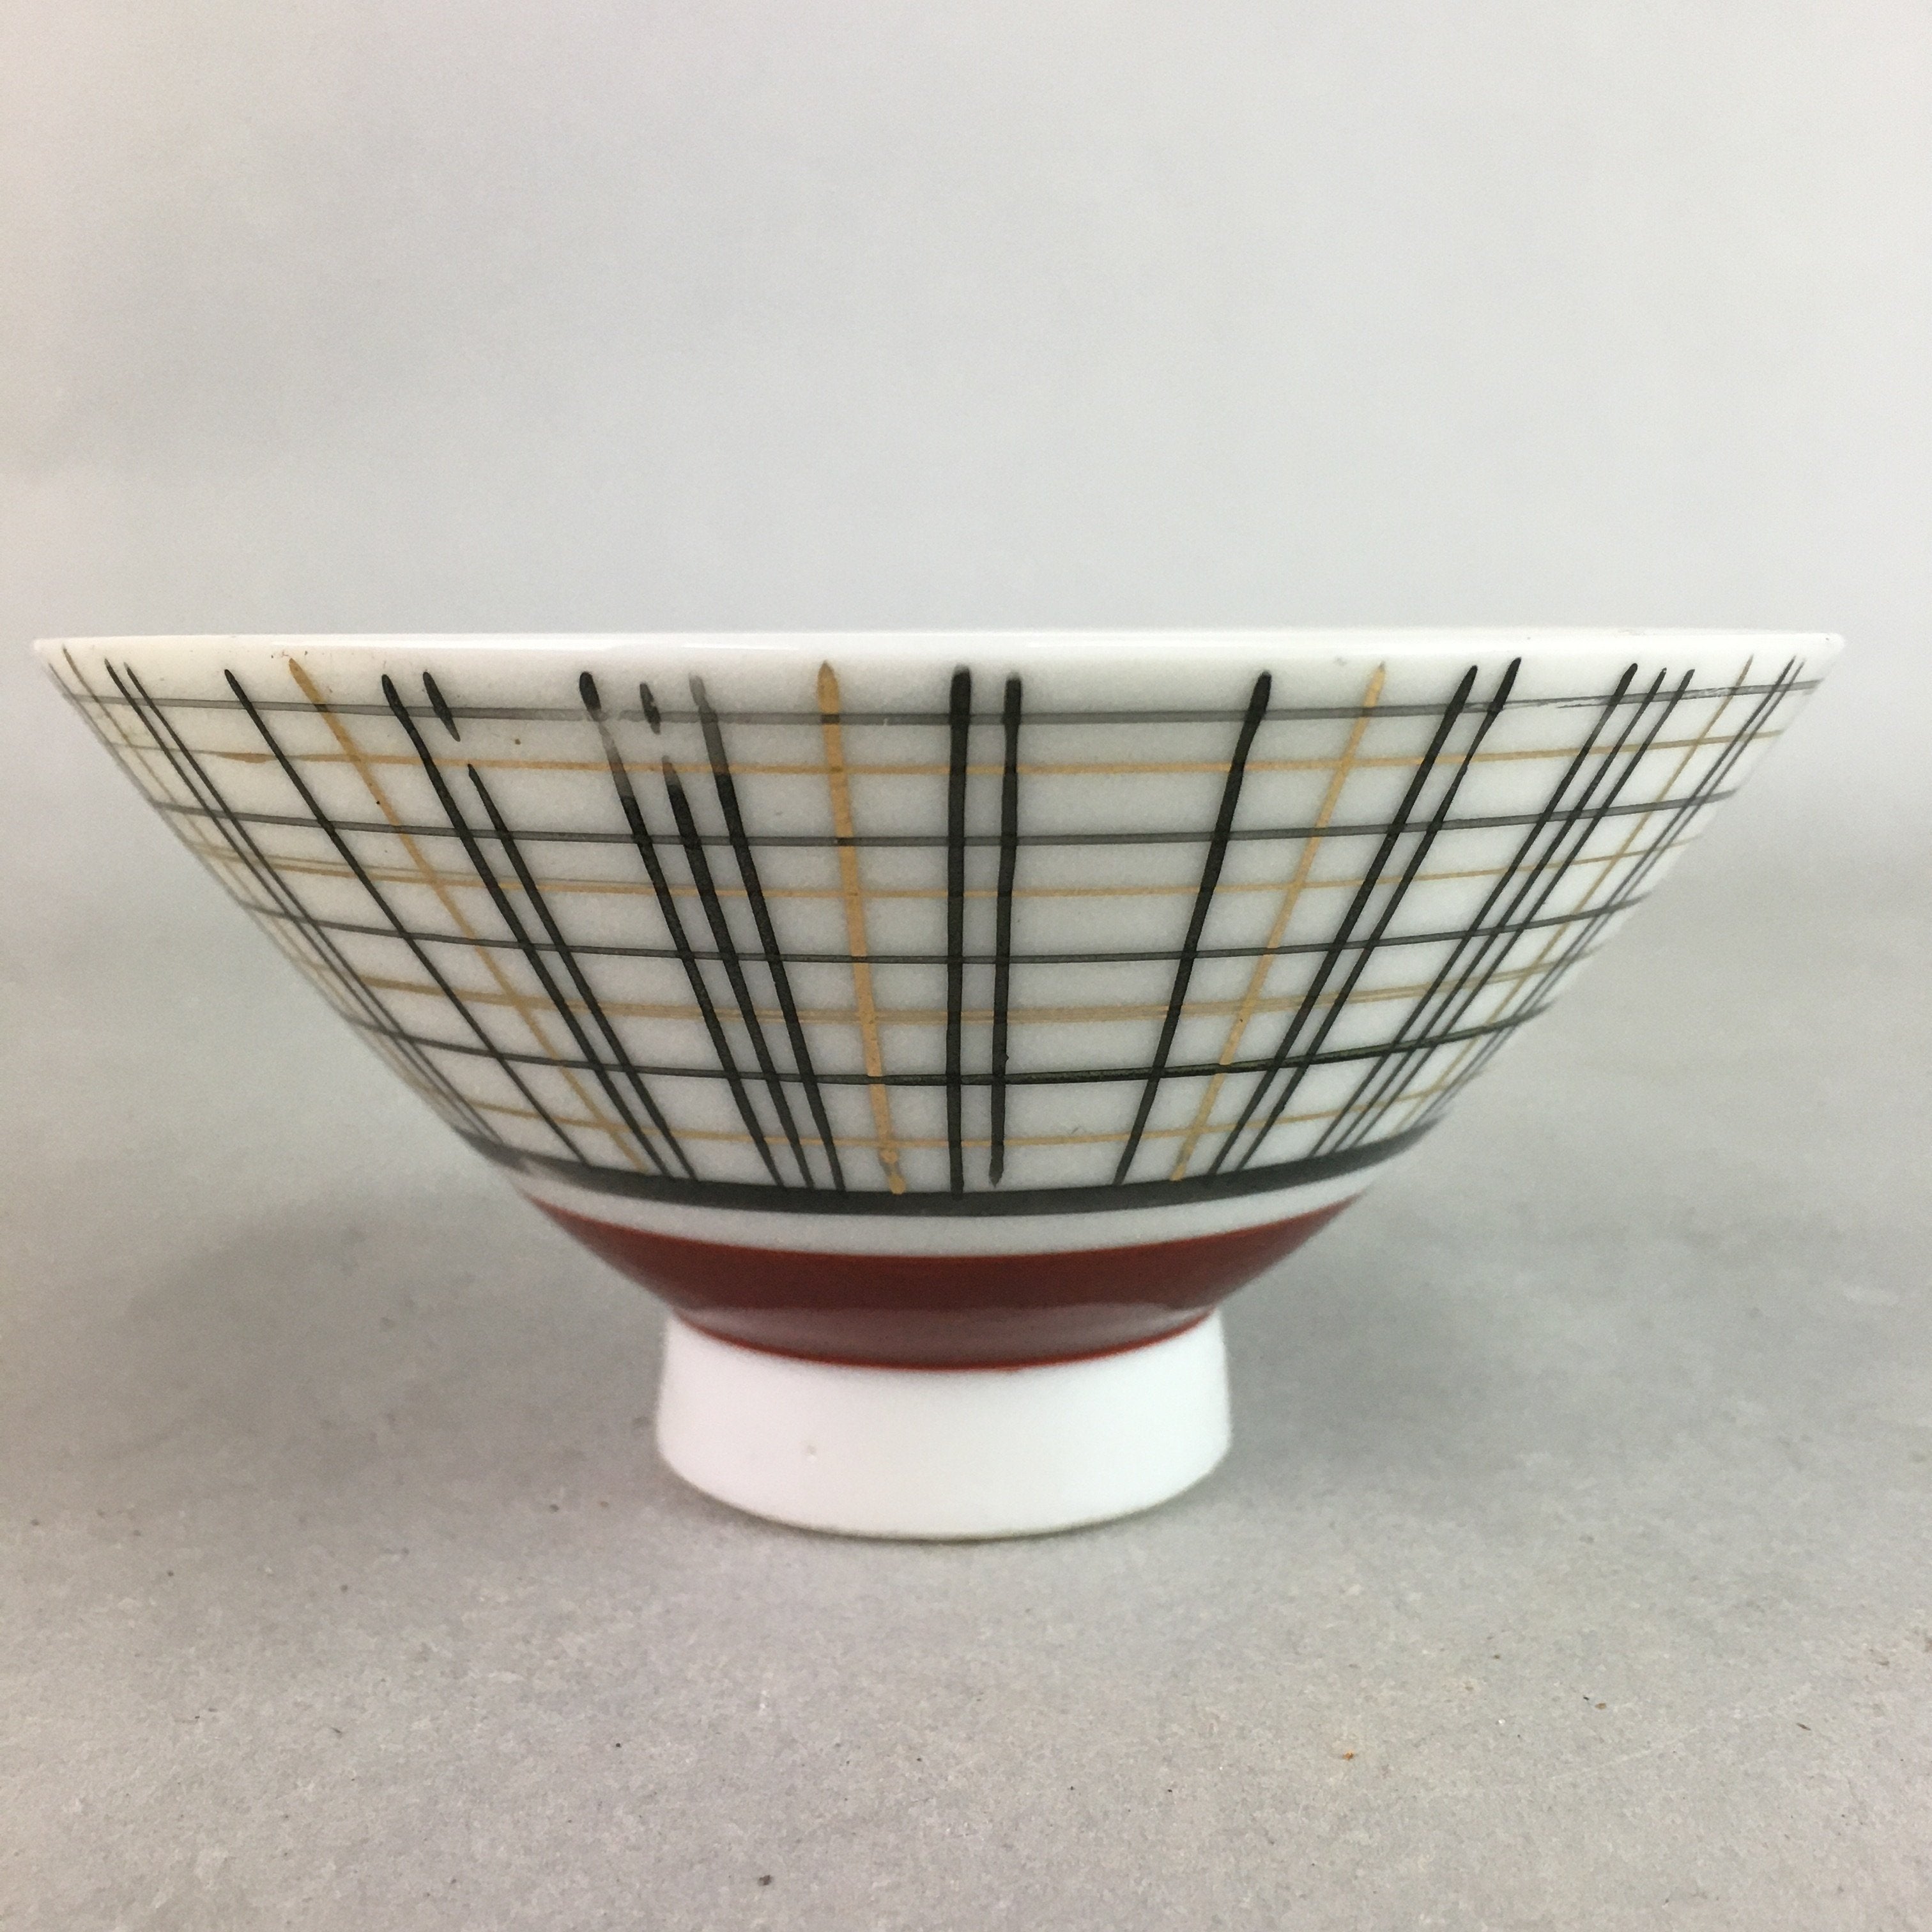 Japanese Porcelain Rice Bowl Vtg Chawan Plaid Black Gold Red PP282